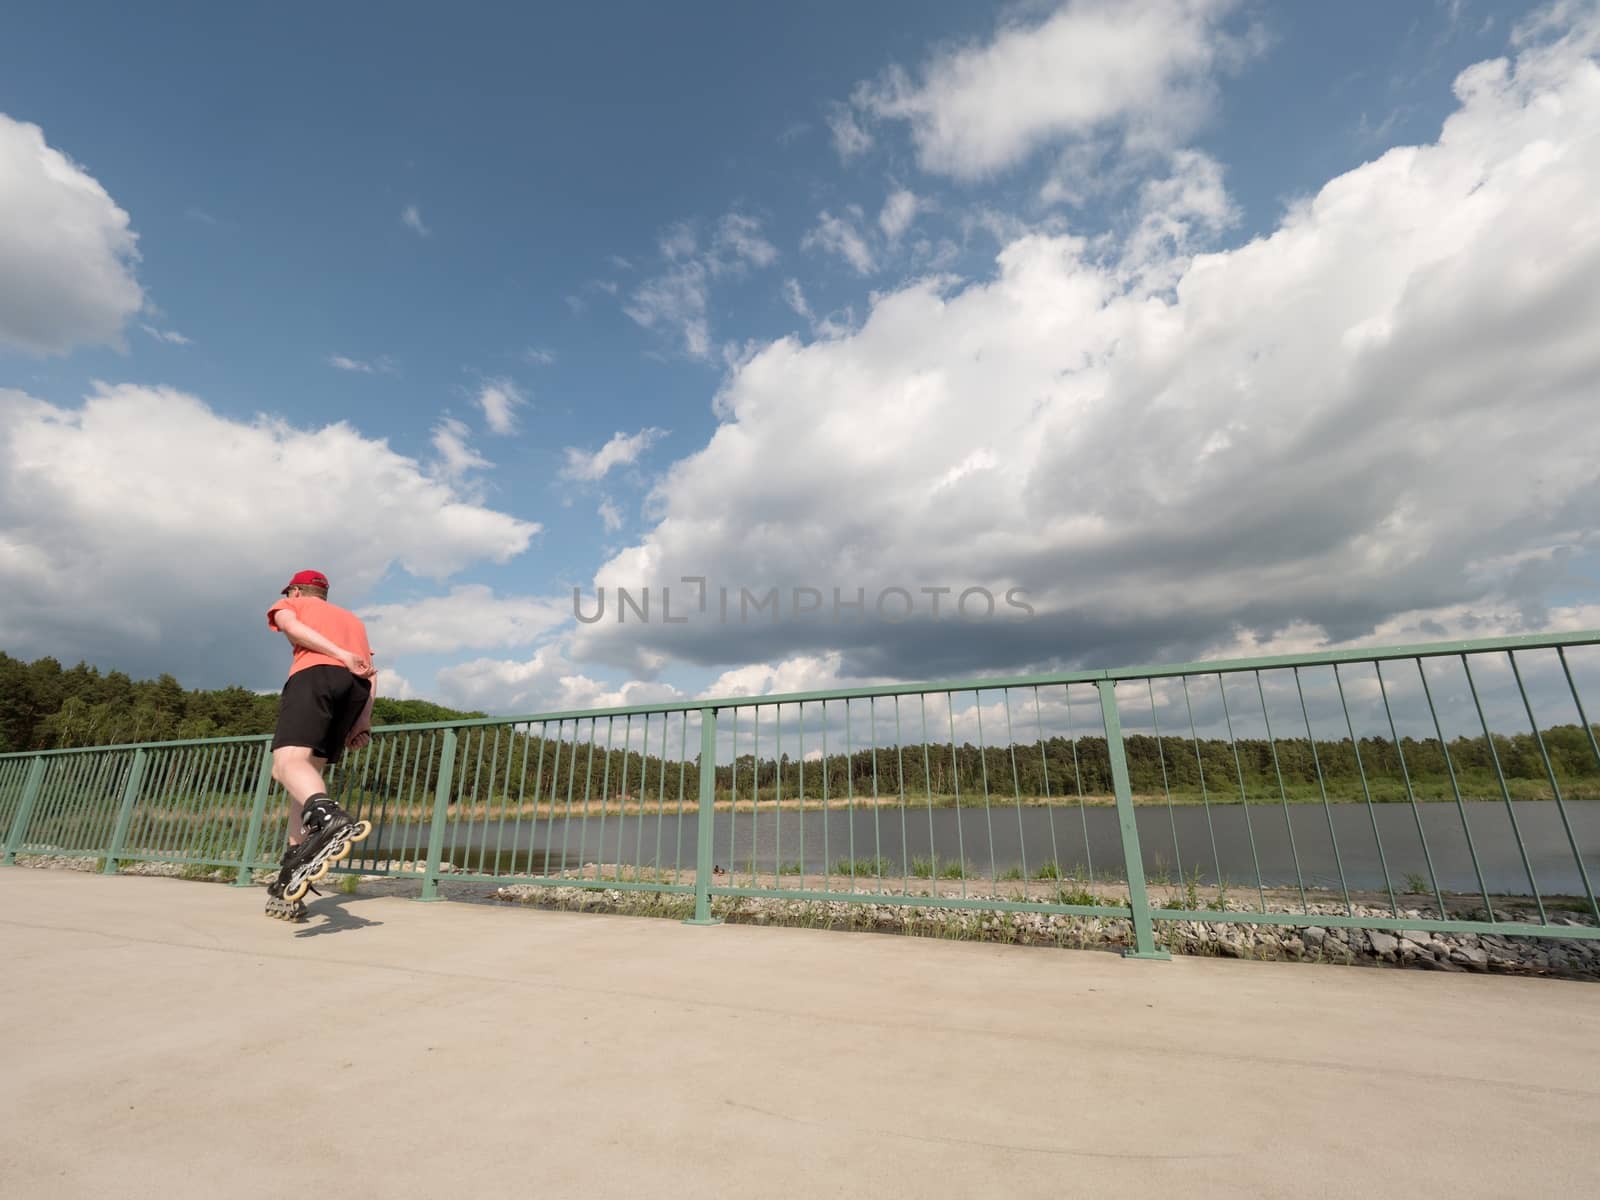 Roller skater in action. Man ride in inline skates ride along promenade handrail, sky in background by rdonar2